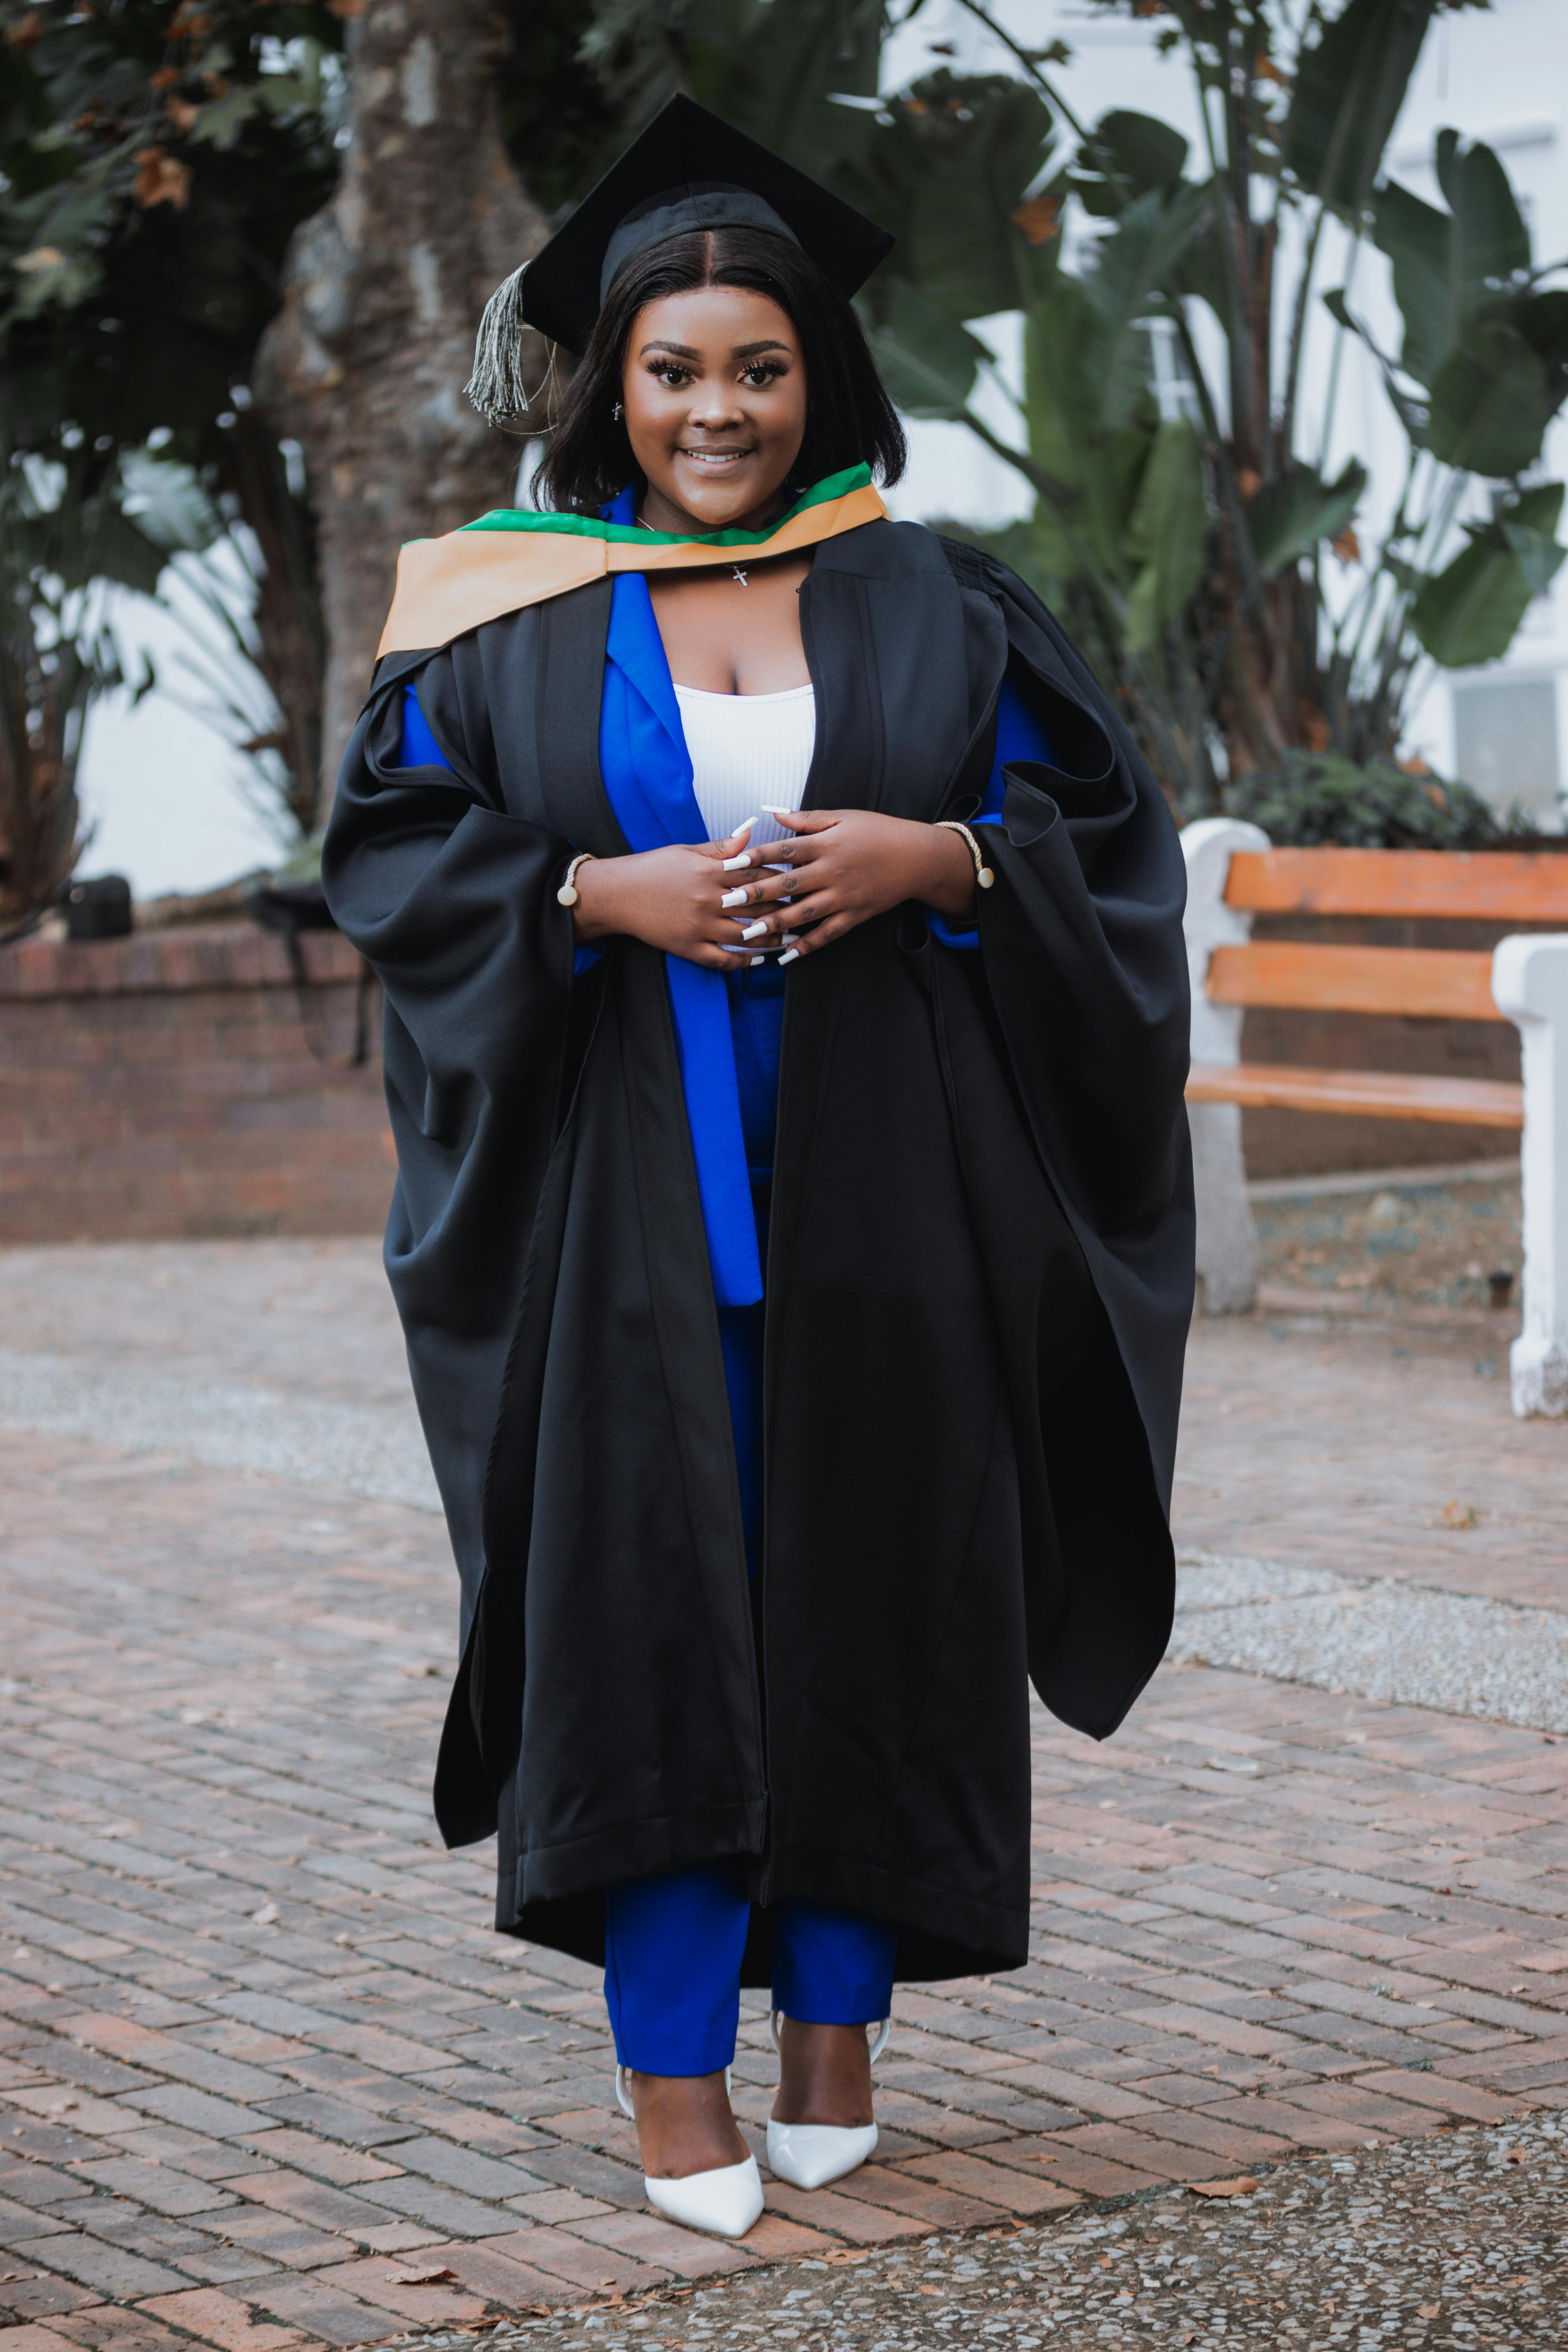 Black Doctoral Degree | Graduation photoshoot, Graduation picture poses,  Graduation poses